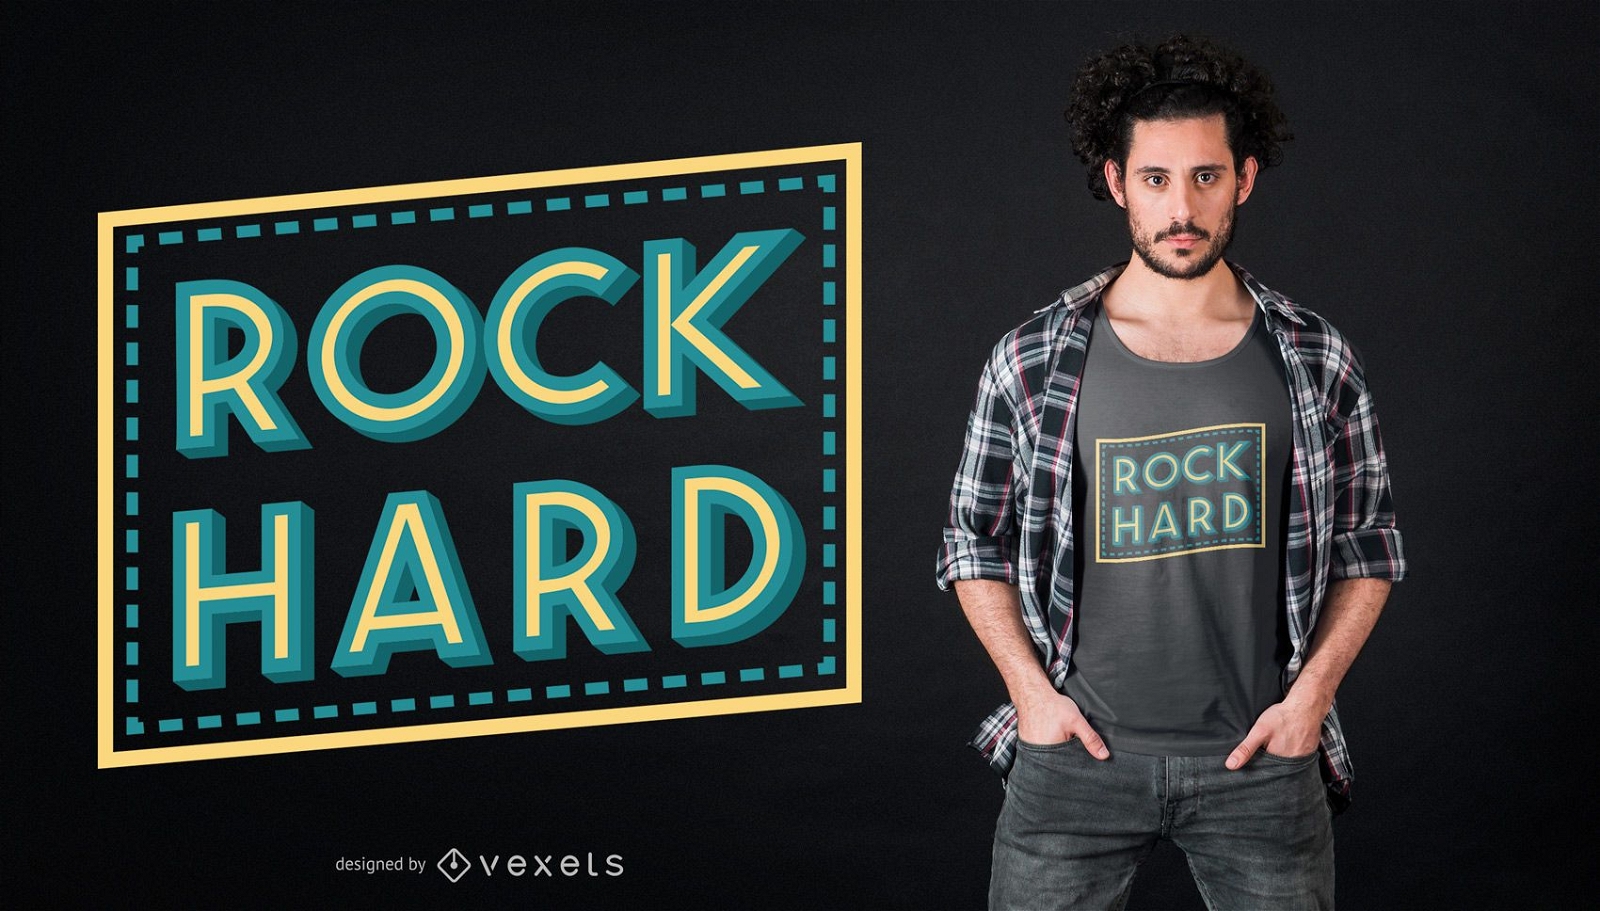 Rock hard t-shirt design